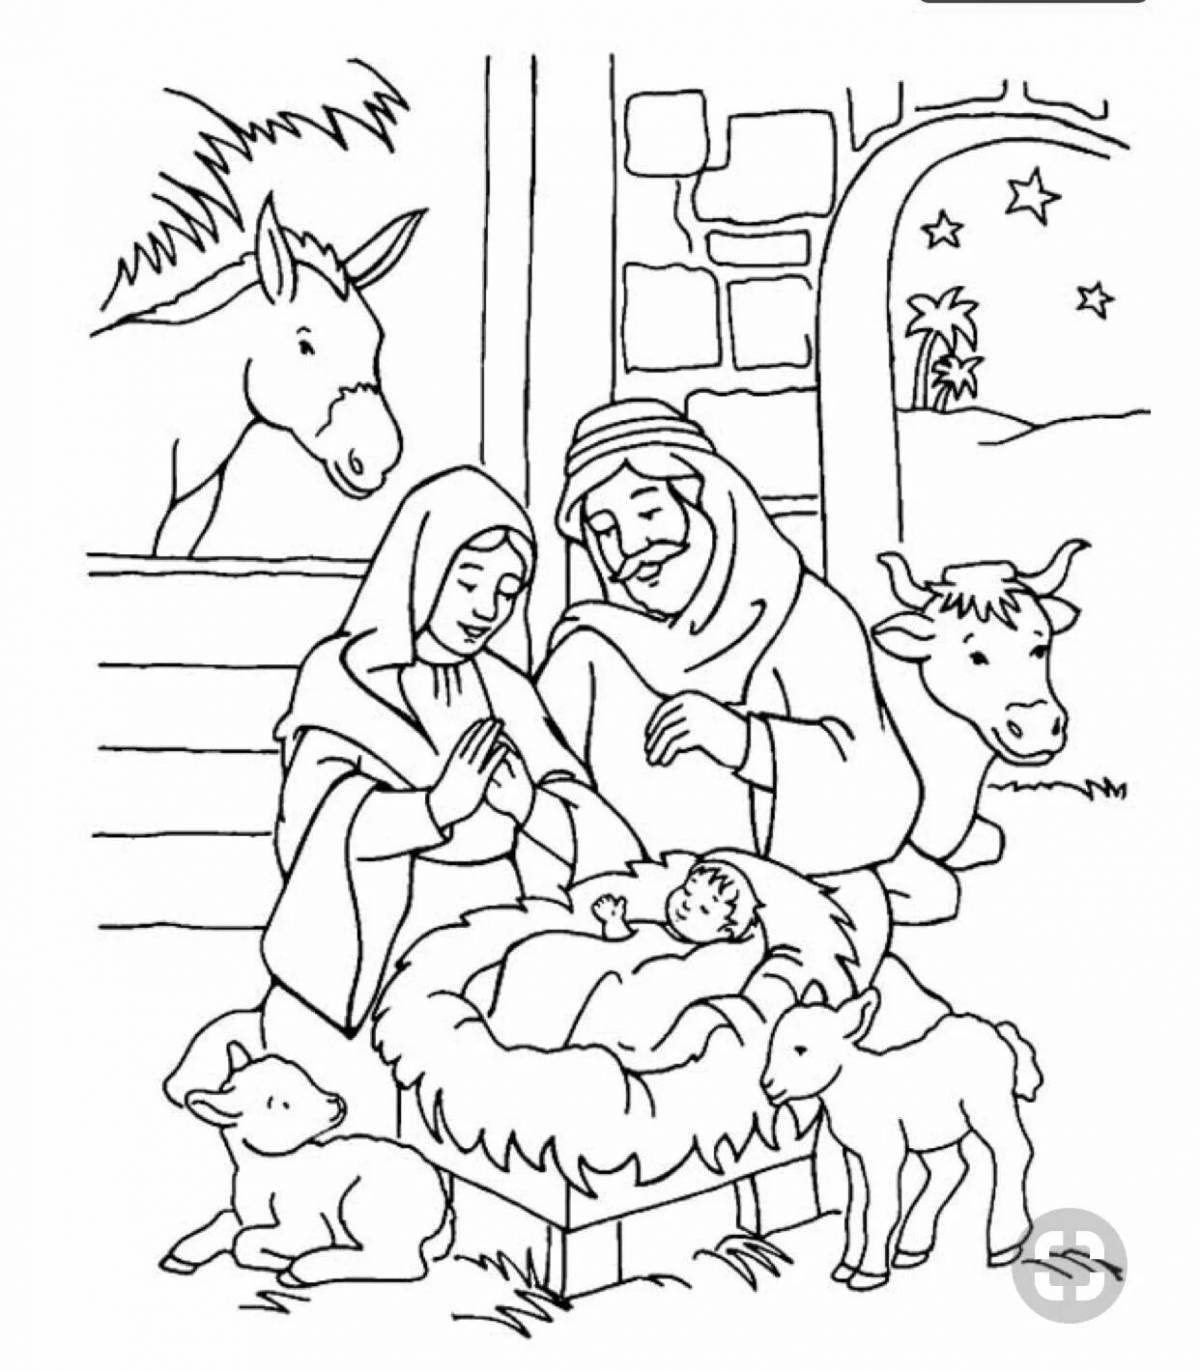 Легкие рисунки на тему рождество христово